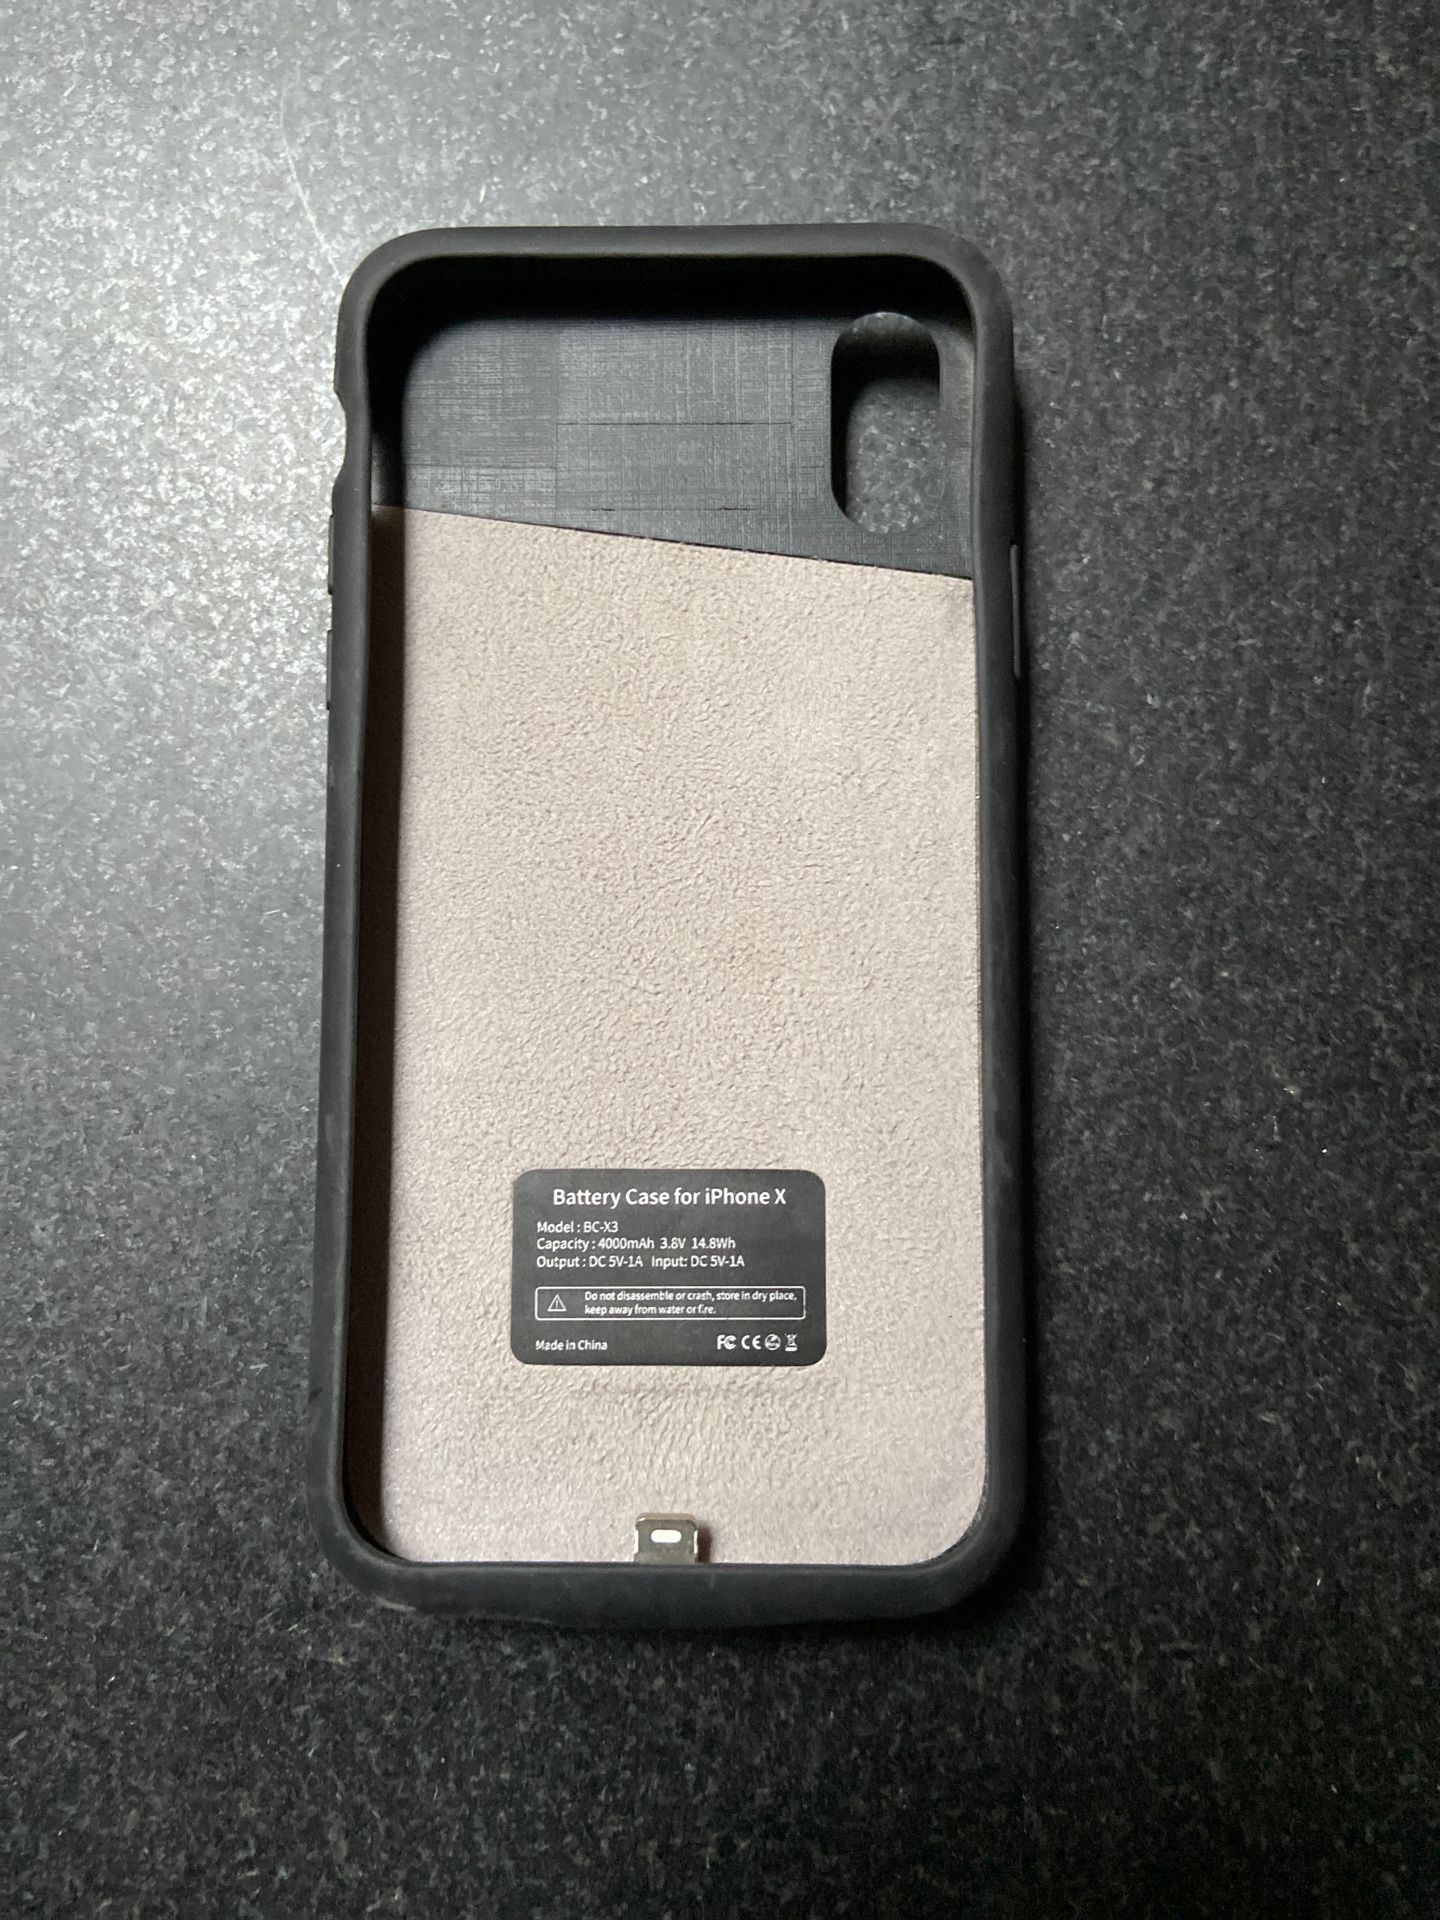 iPhone X Charging Case